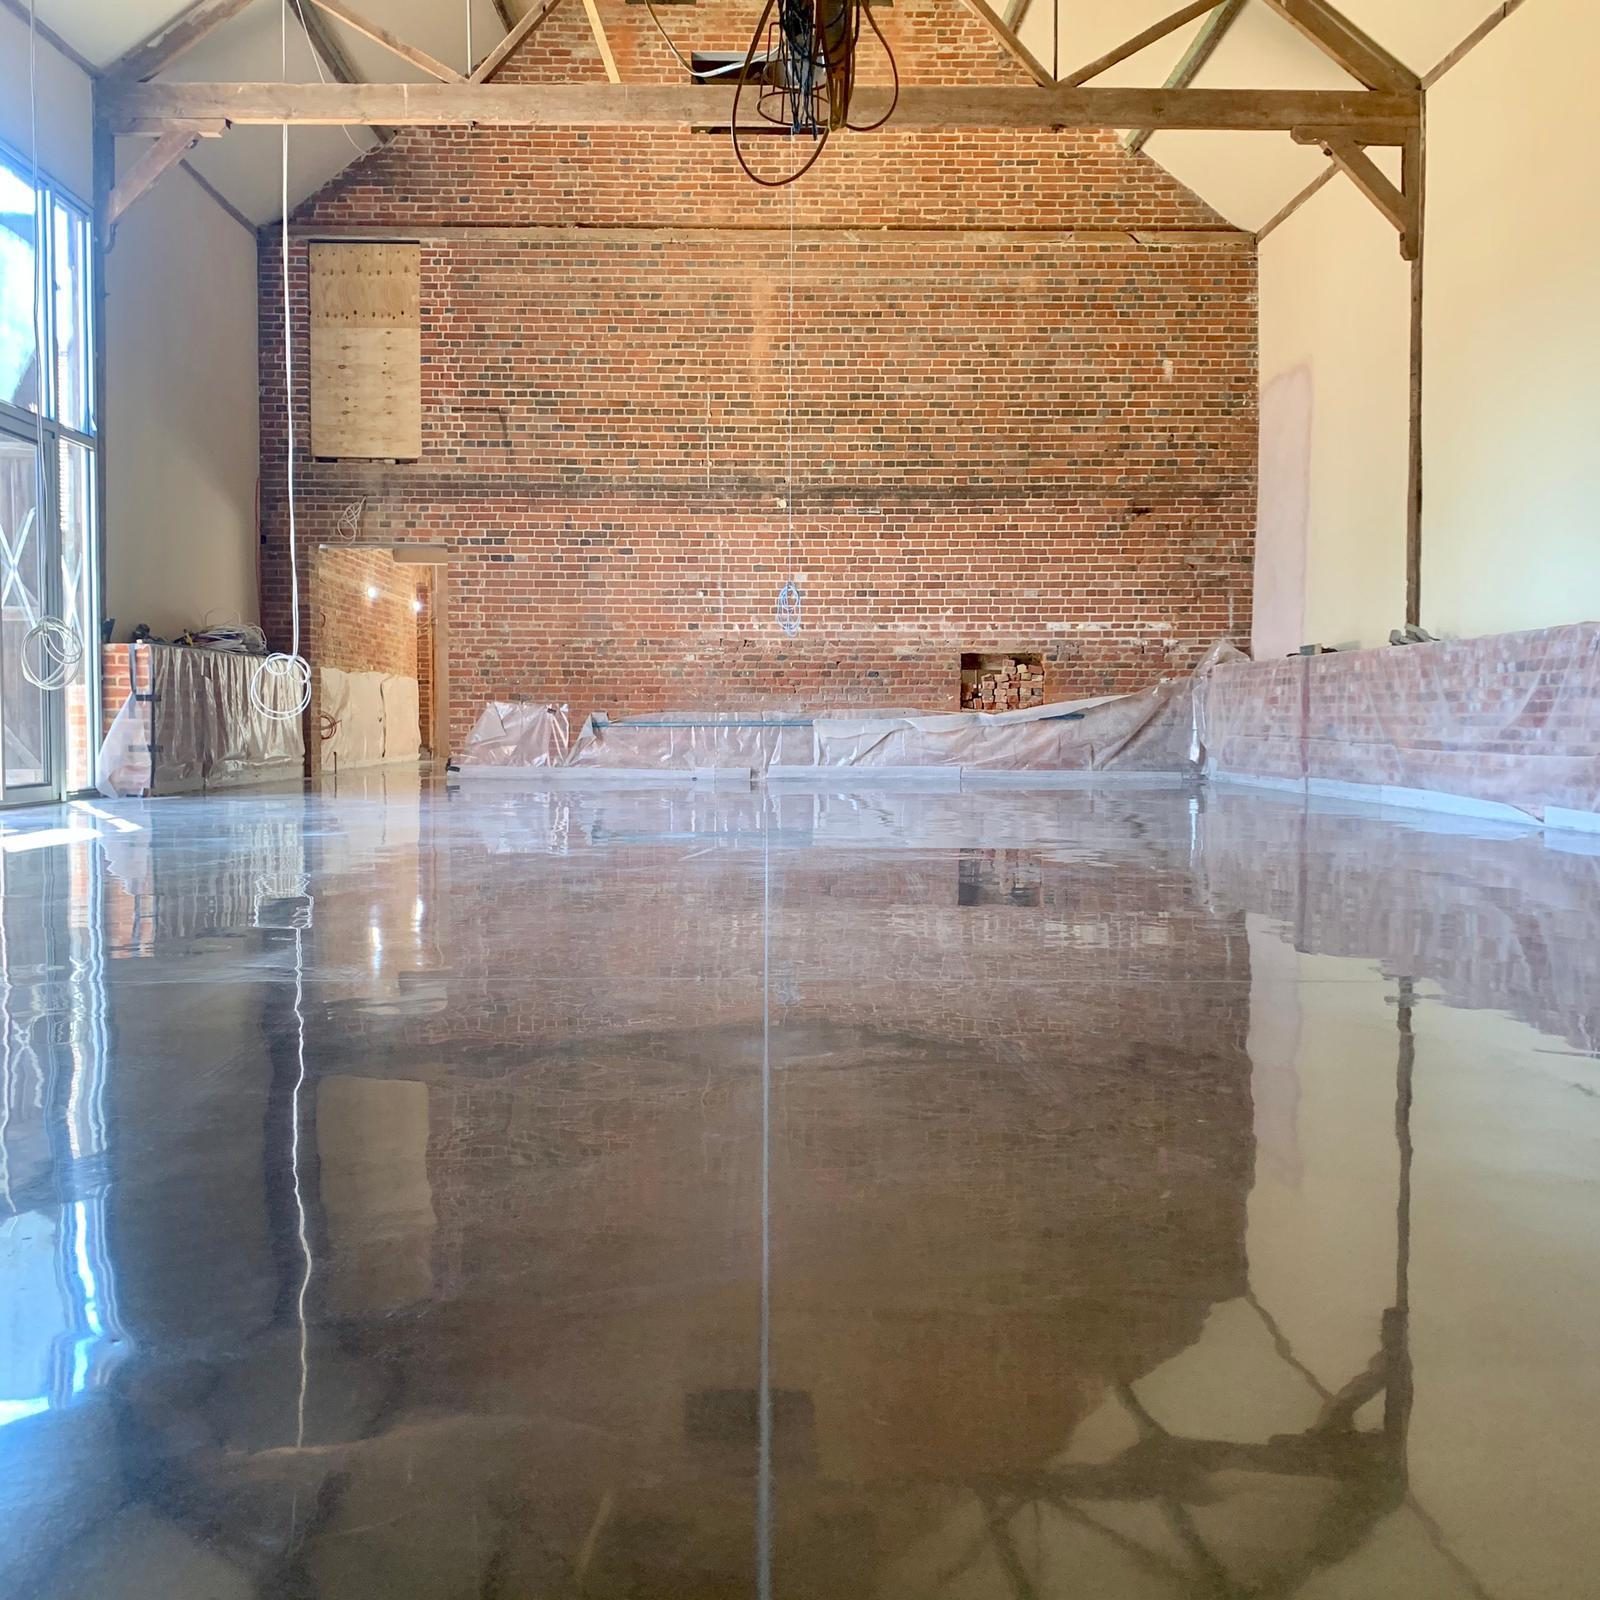 Completed floor